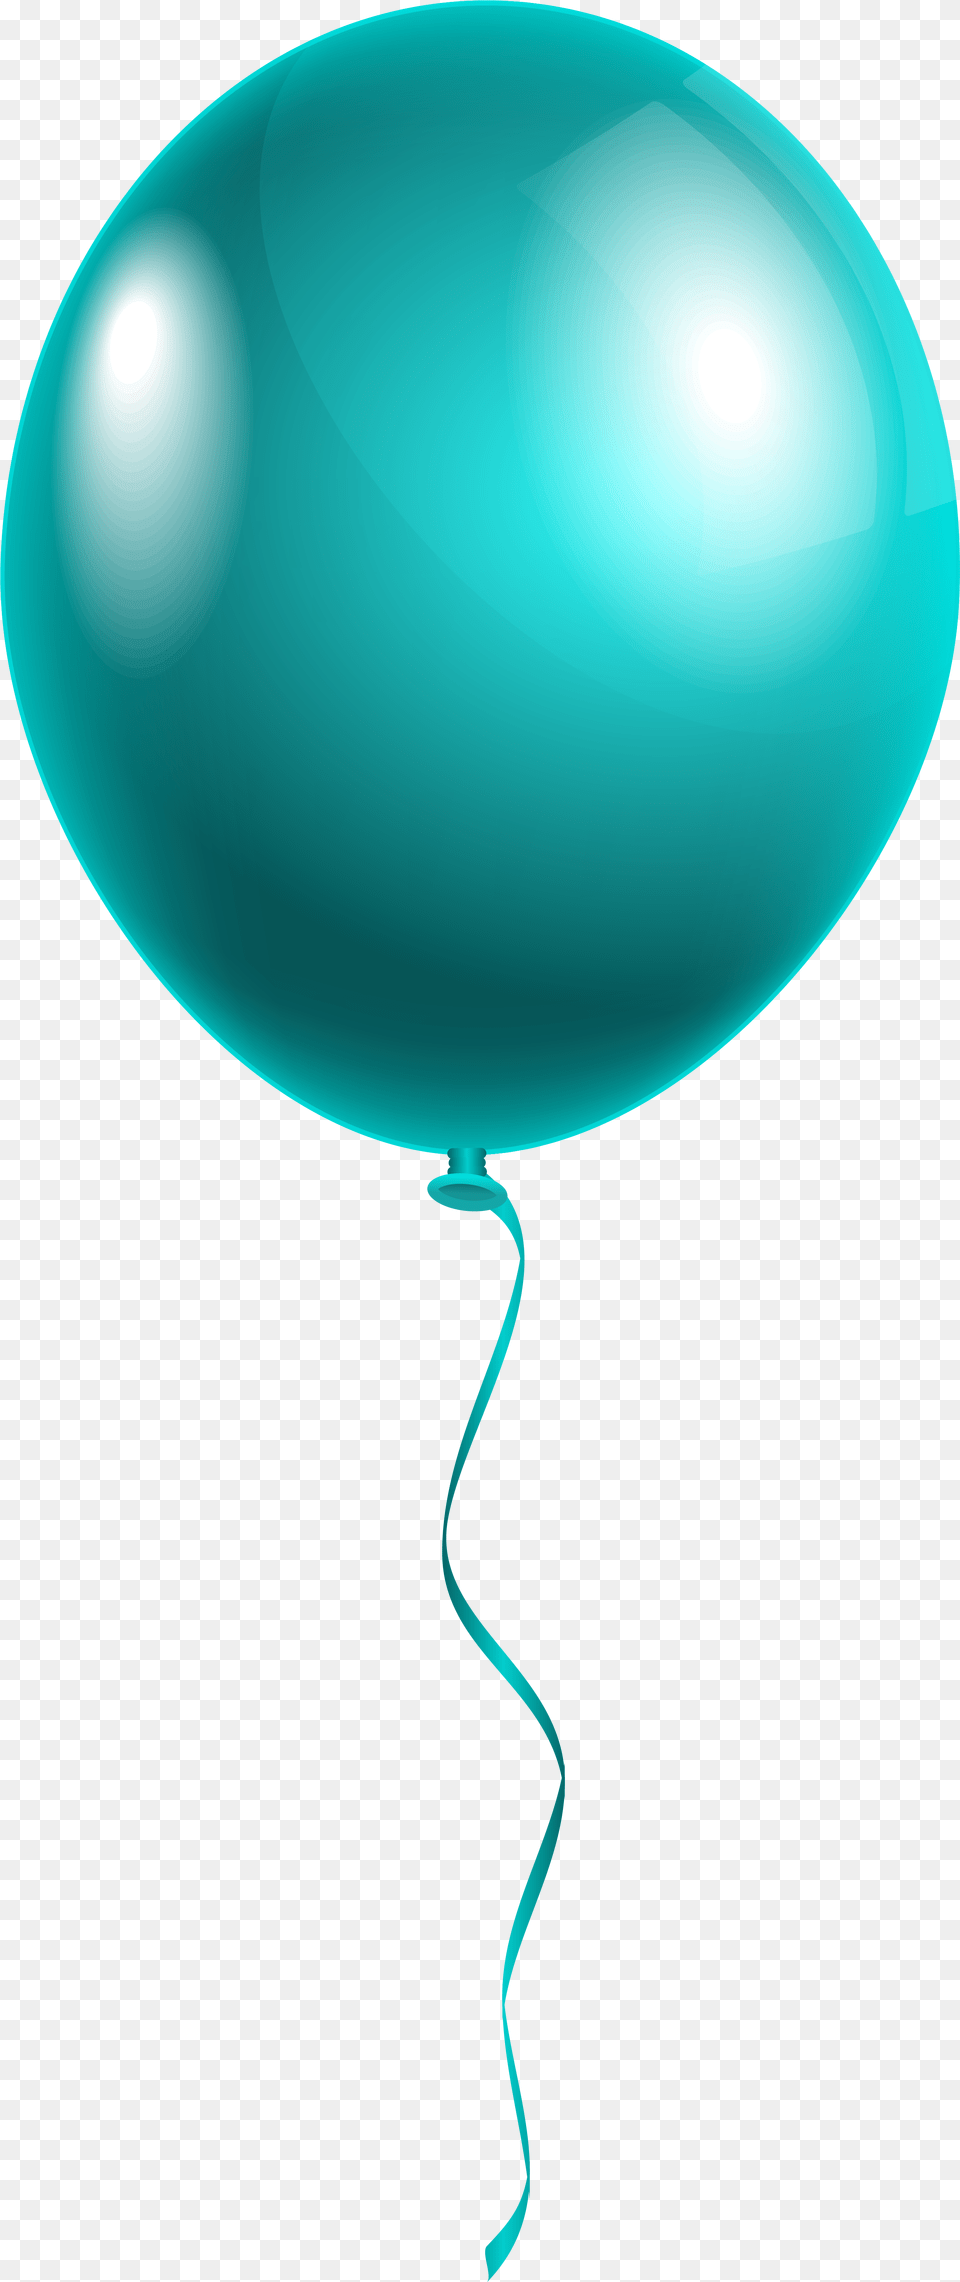 Single Modern Blue Balloon Clipart Balloon Clipart Png Image